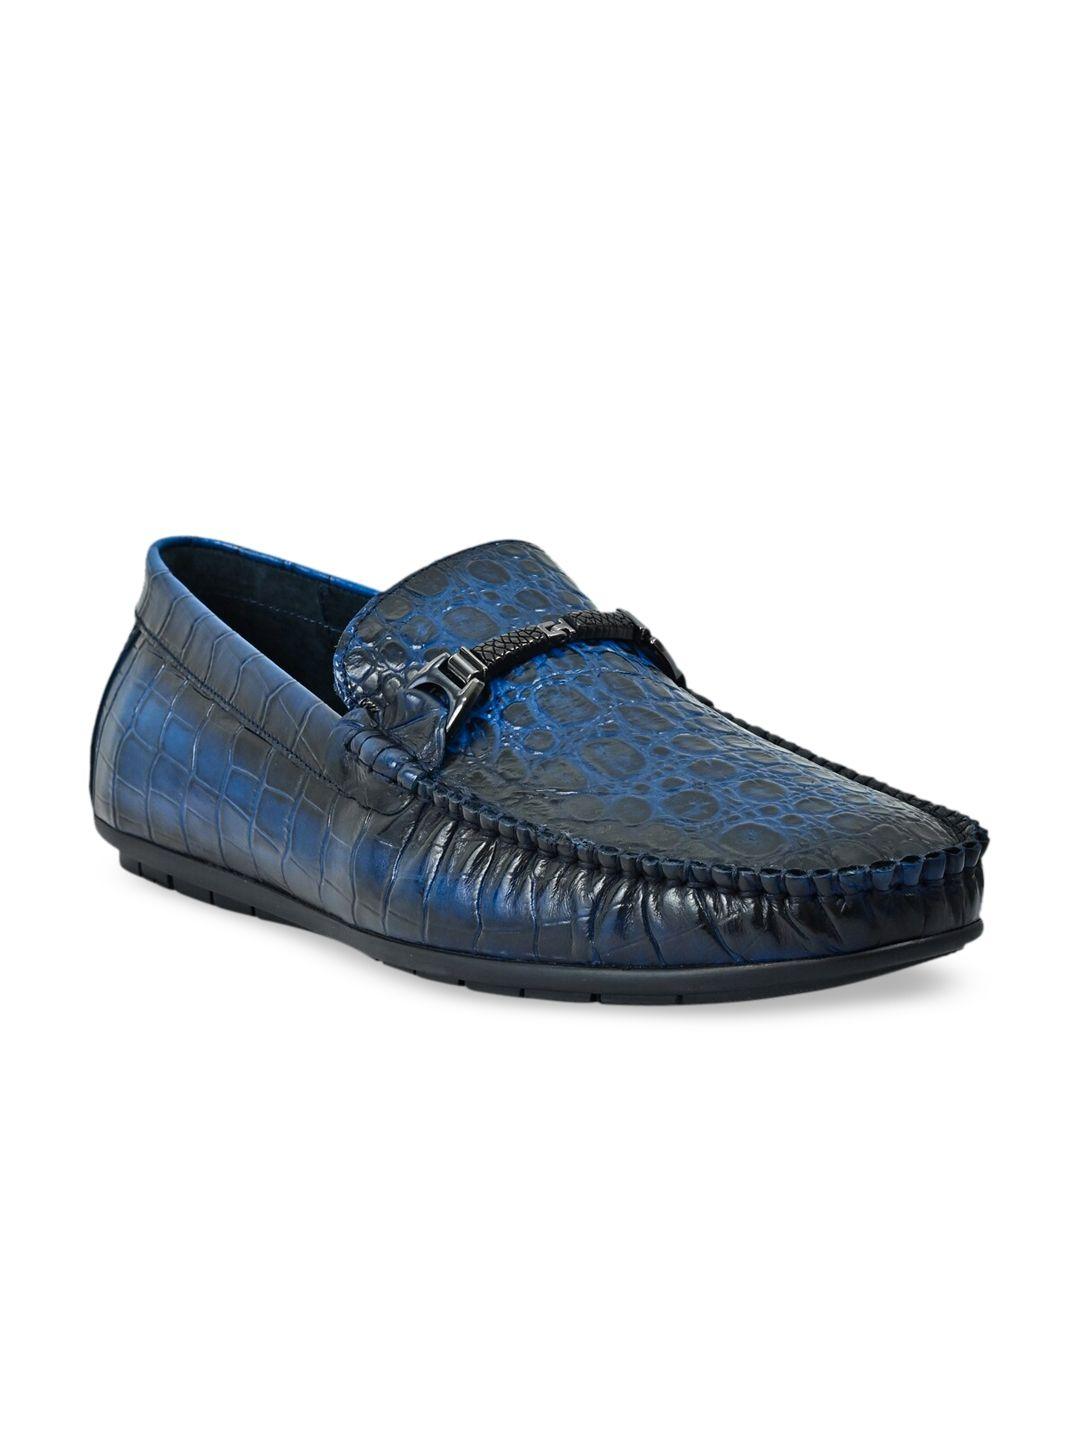 cobblerz men blue textured leather loafers